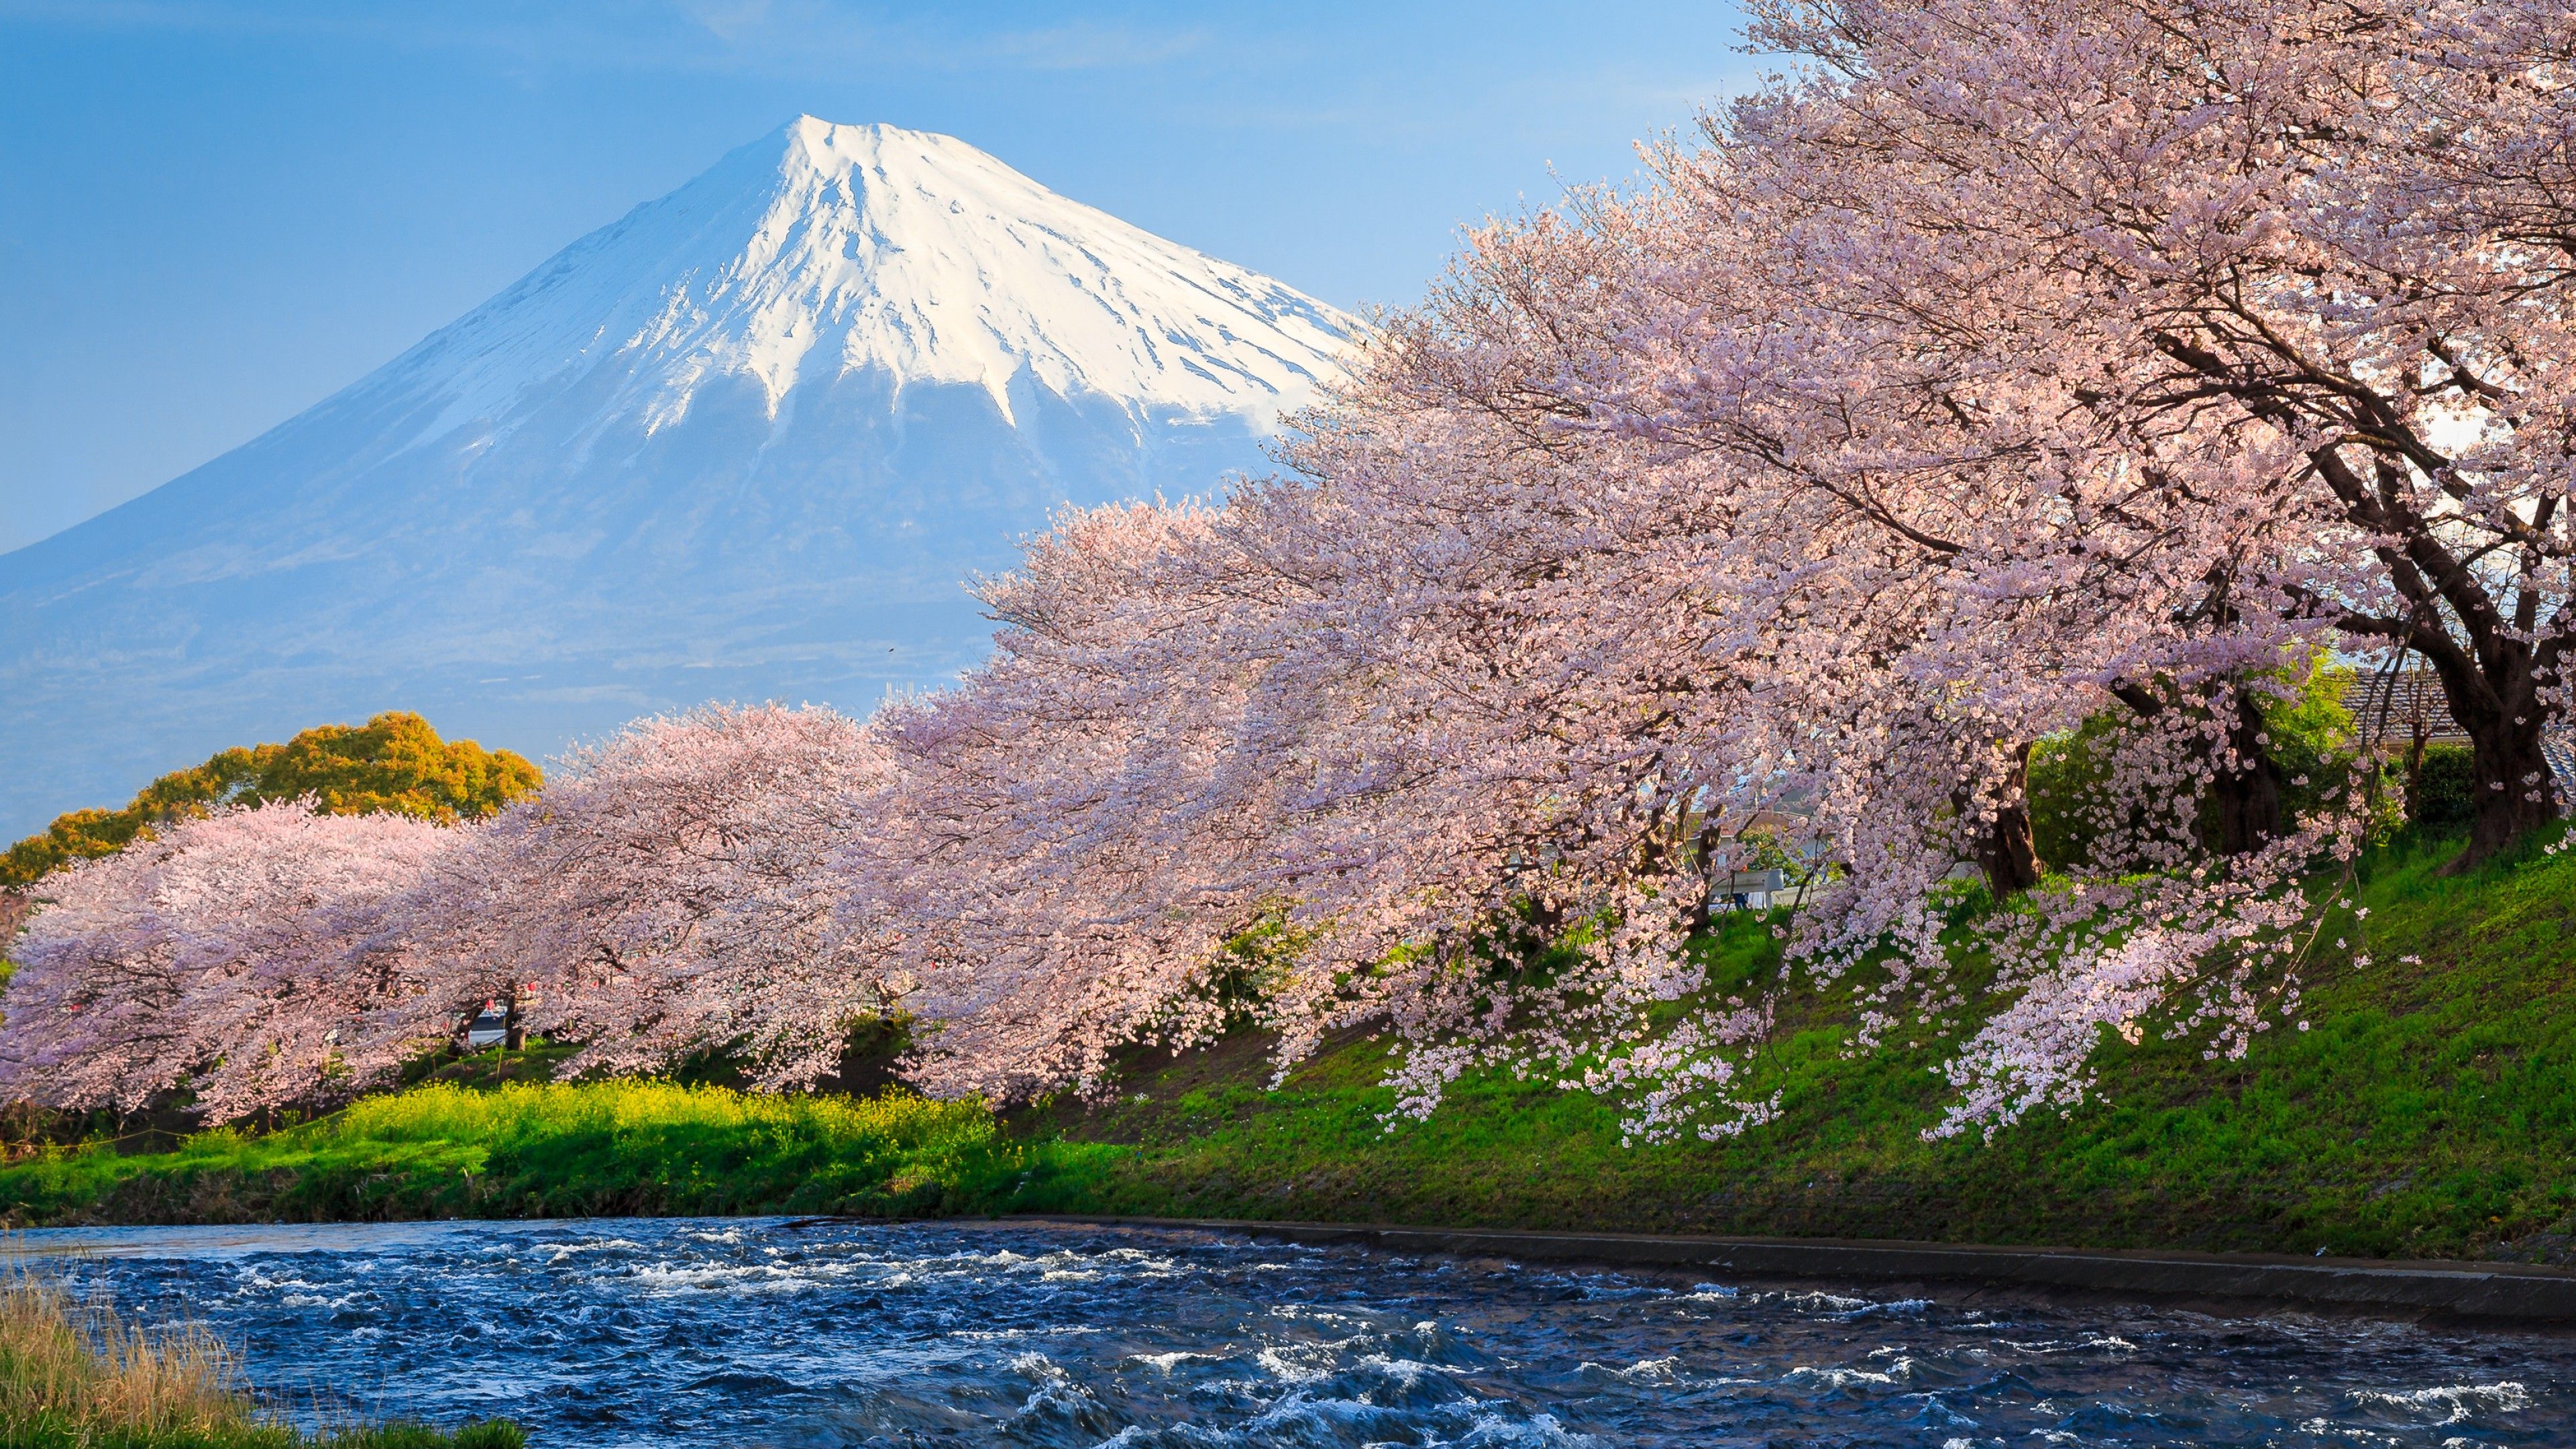 Sakura River japan, HD World, 4k Wallpaper, Image, Background, Photo and Picture